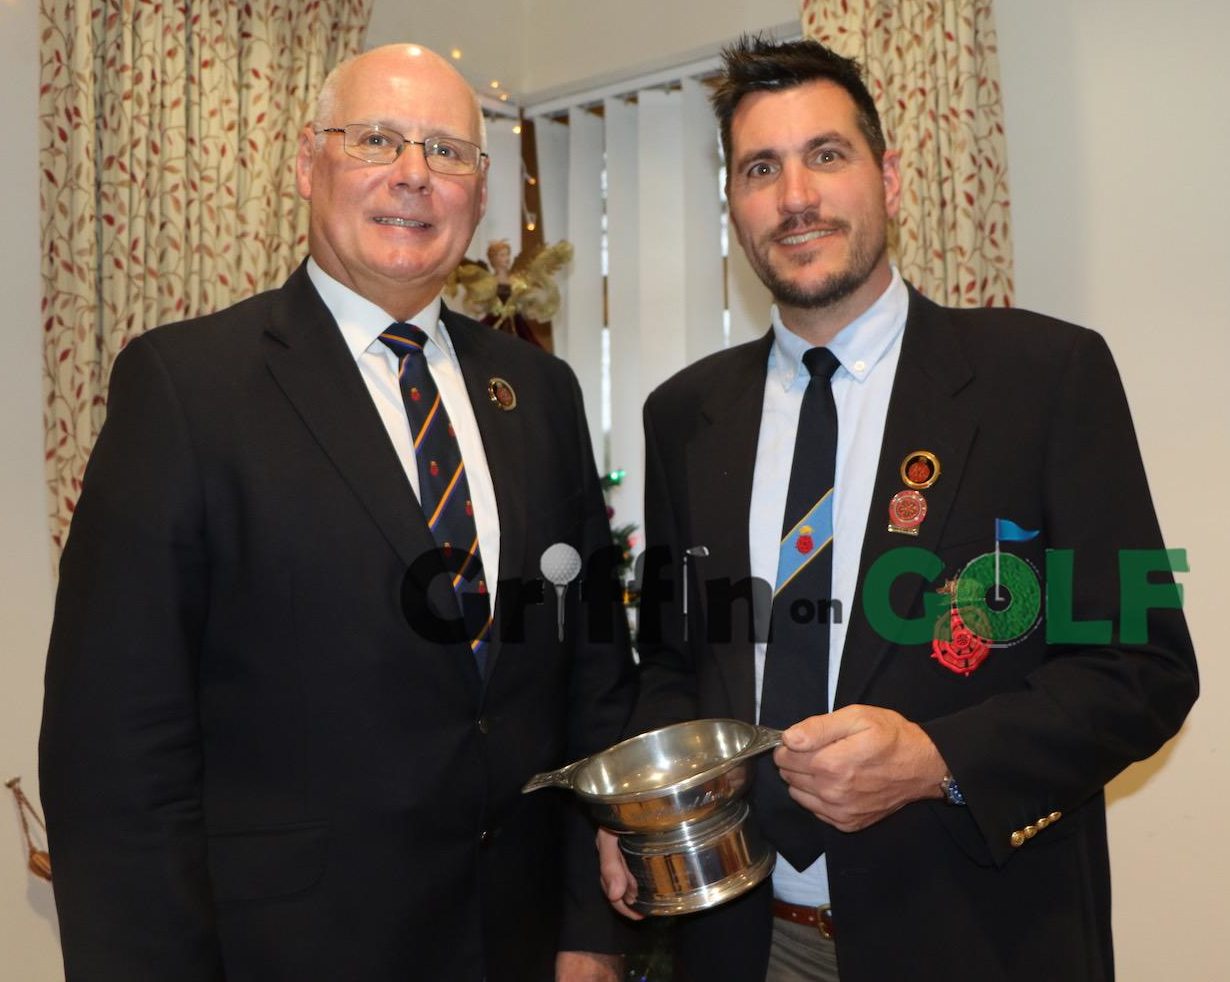 Hampshire Golf 2019 Order of Merit winner Martin Young